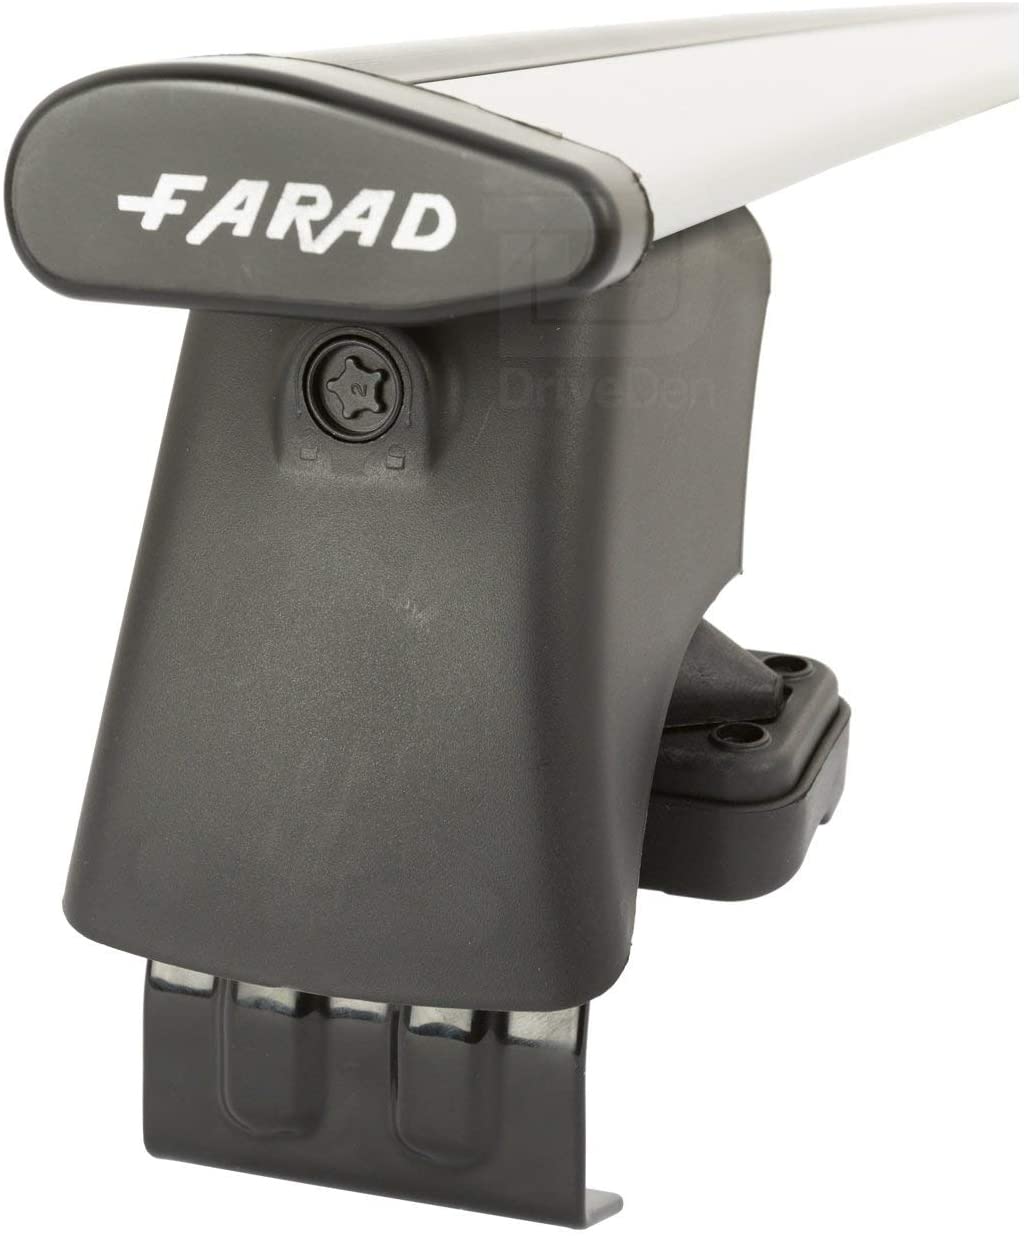 FARAD-Kit H2 per barre portatutto - Ssangyong Actyon Double Cab 2007> (senza corrimano)